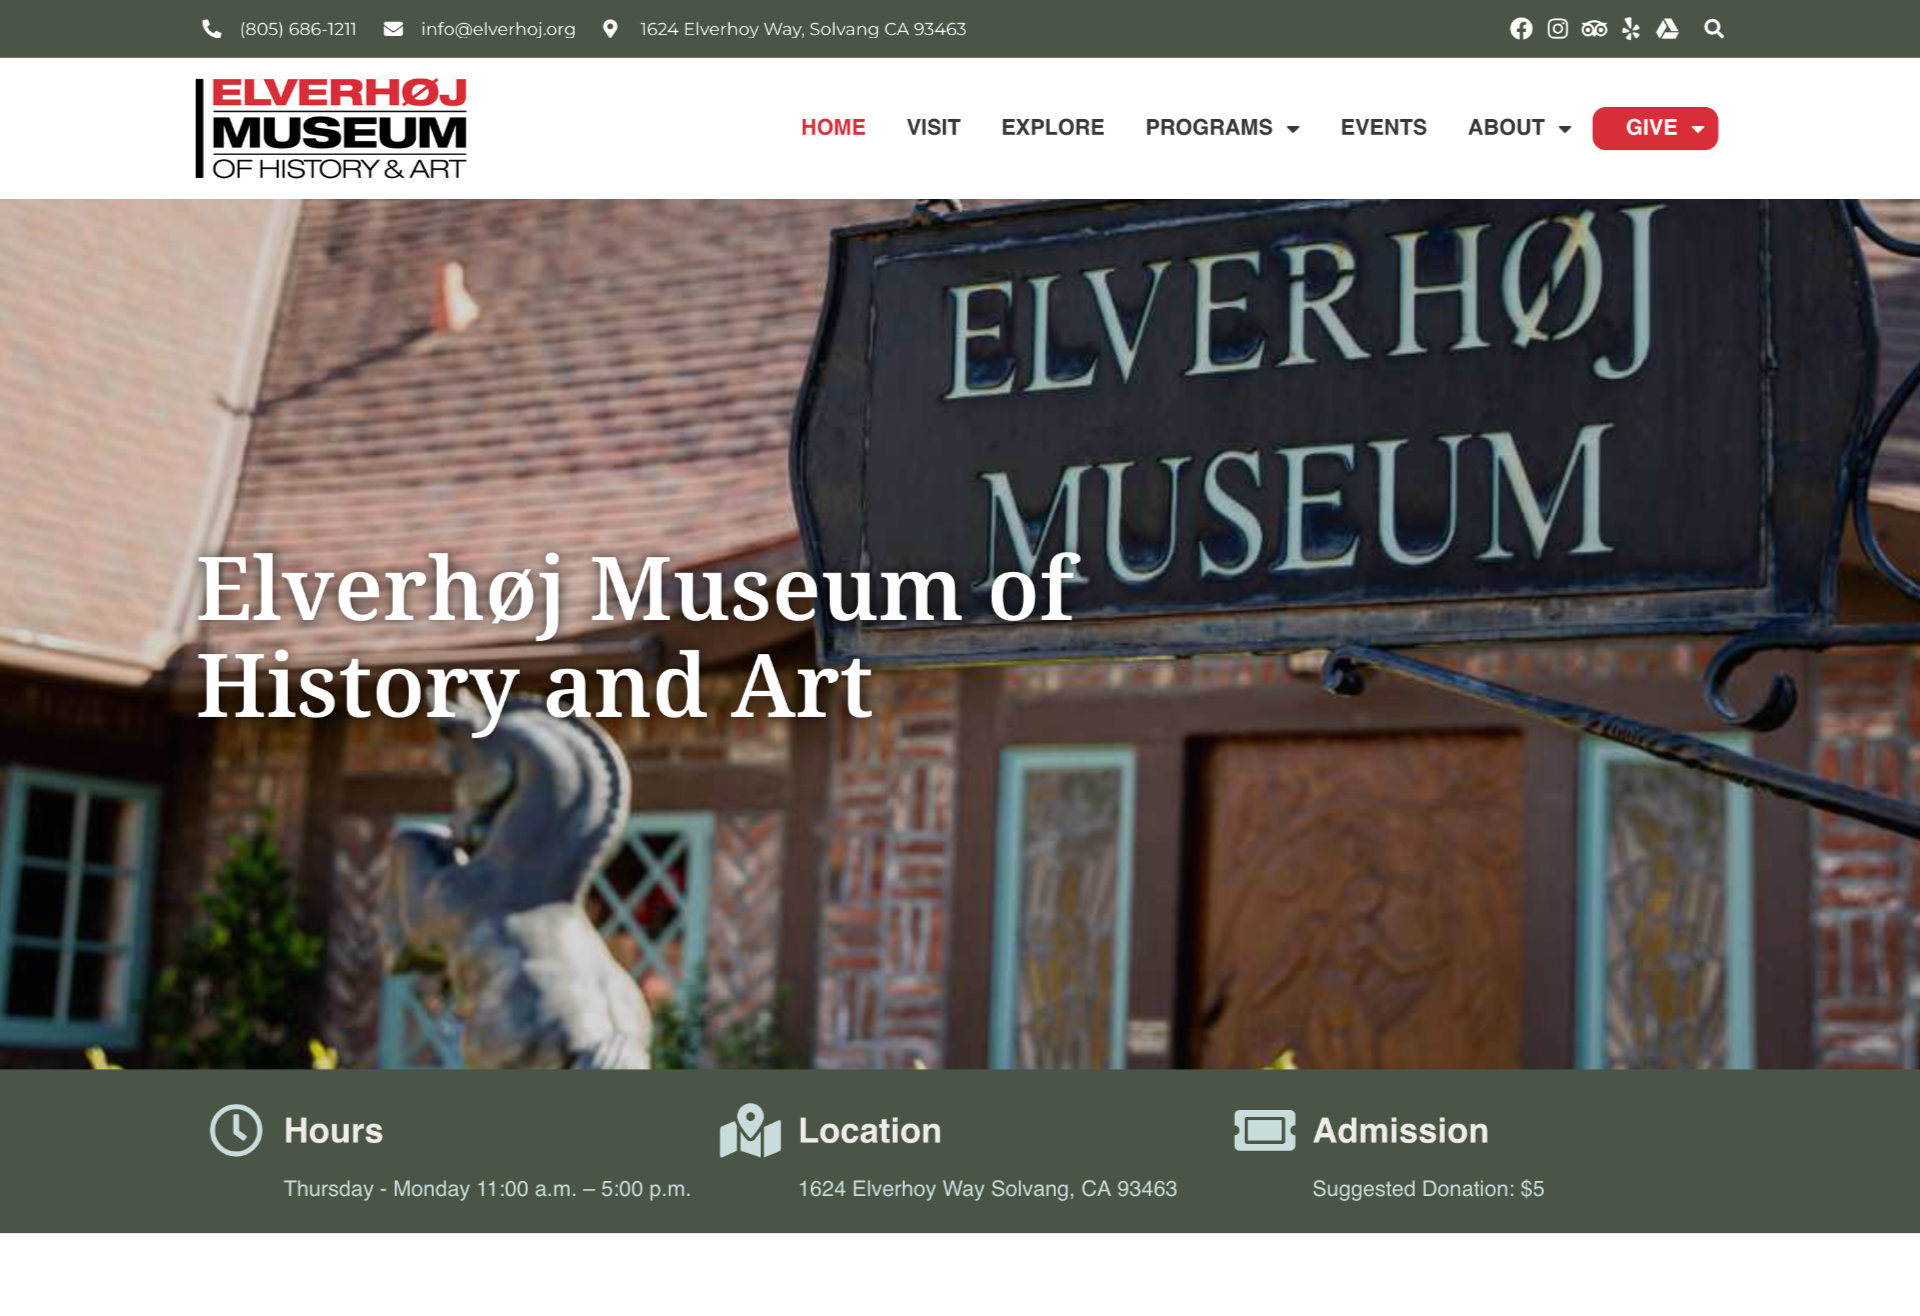 The Elverhøj Museum